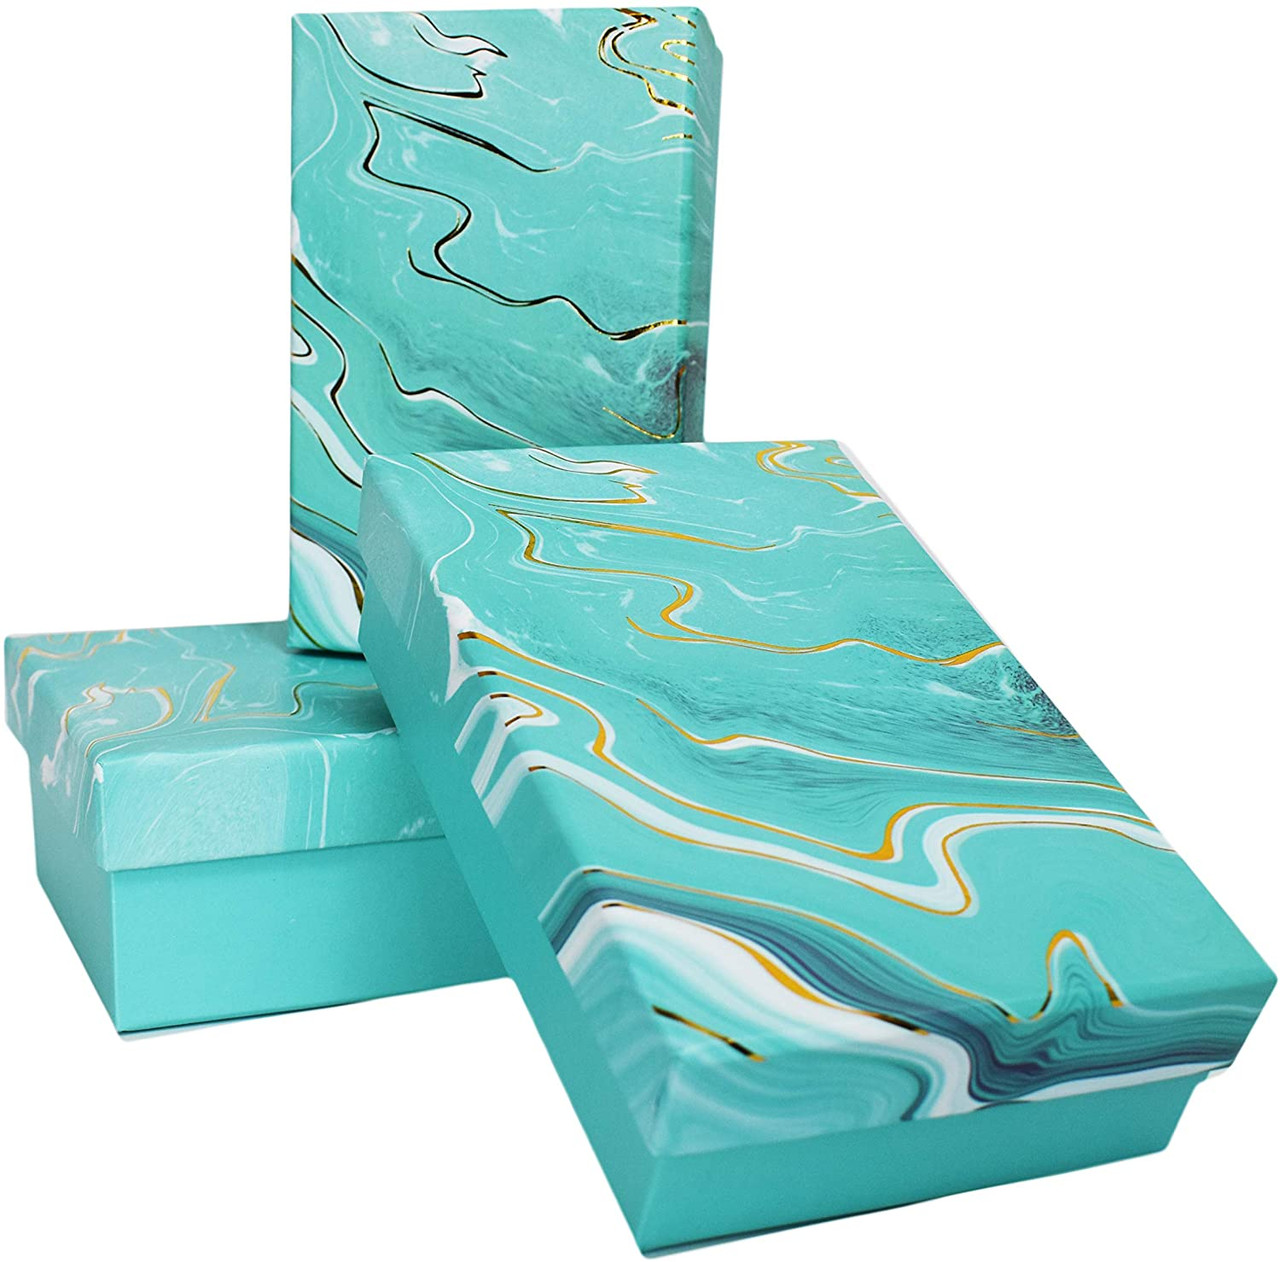 Teal ALEF Elegant Decorative Themed Nesting Gift Boxes -3 Boxes